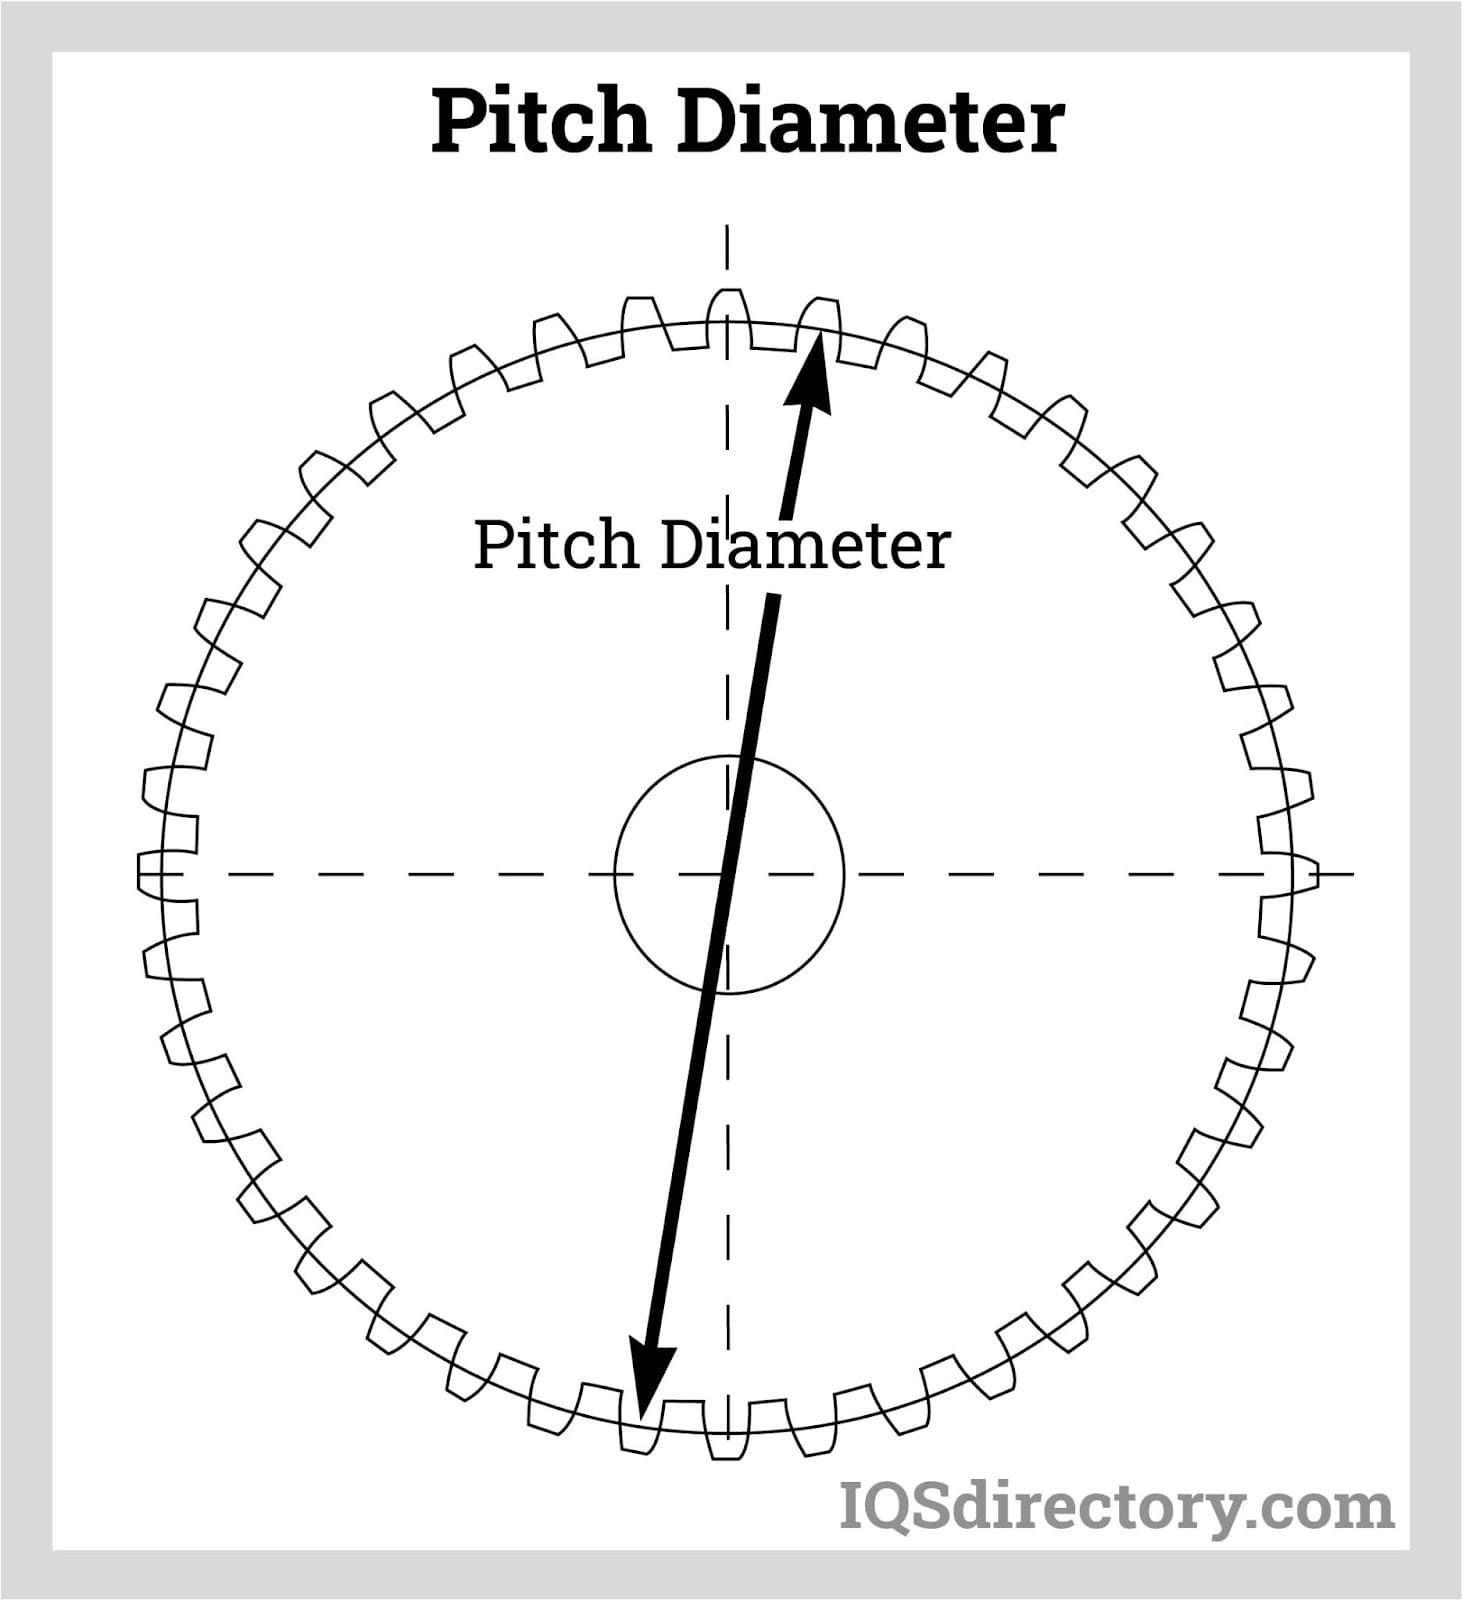 Pitch Diameter